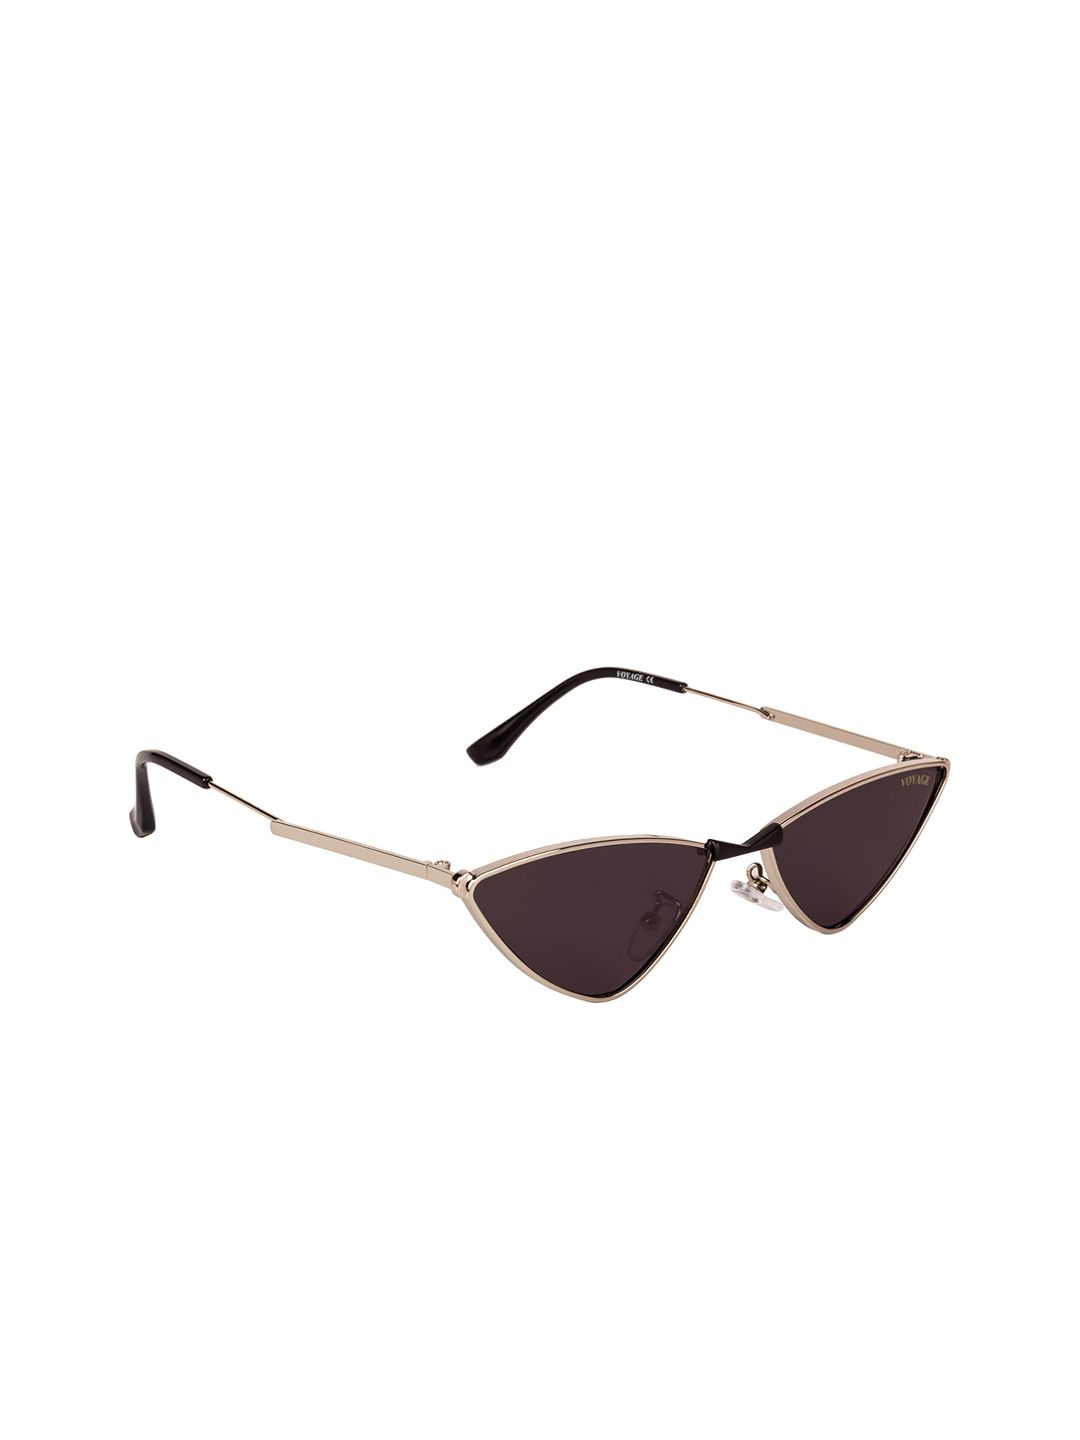 Voyage Unisex Black Cateye Sunglasses B80491MG3439 Price in India